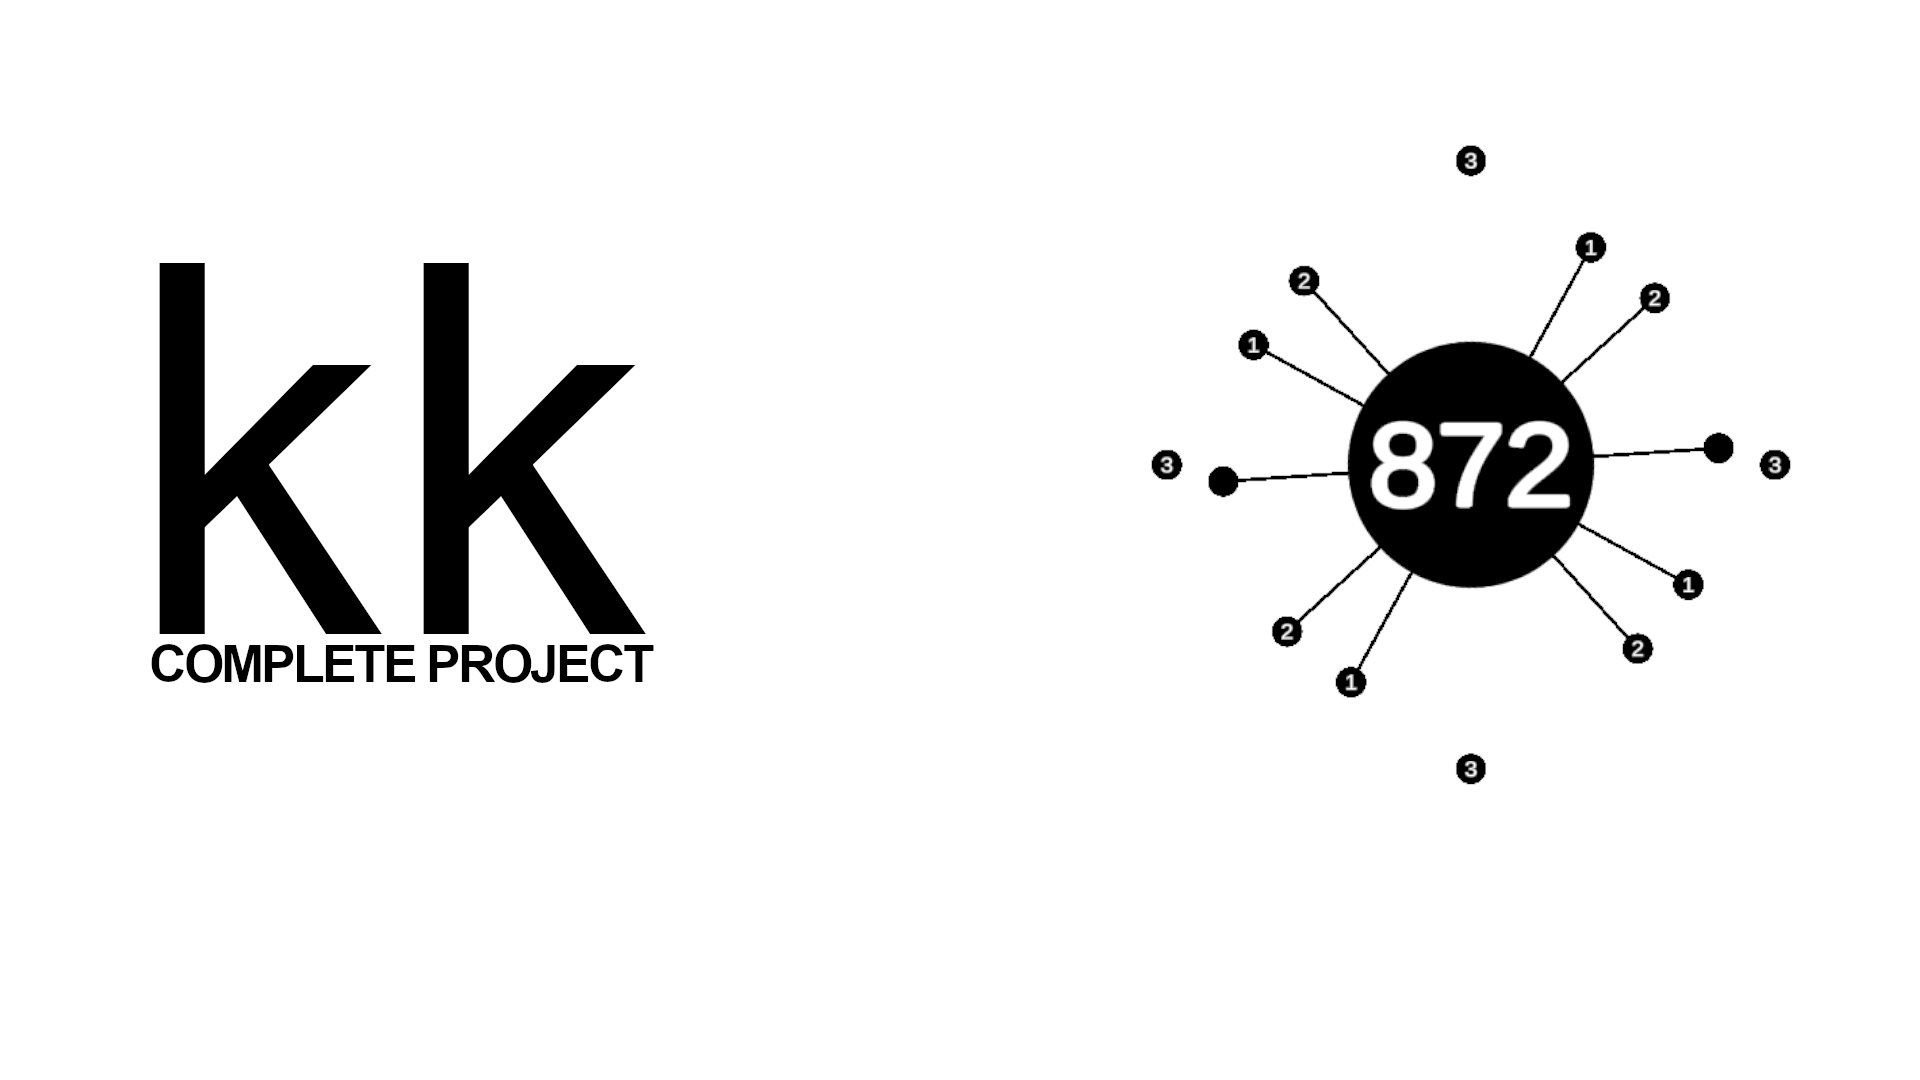 kk: Complete Project